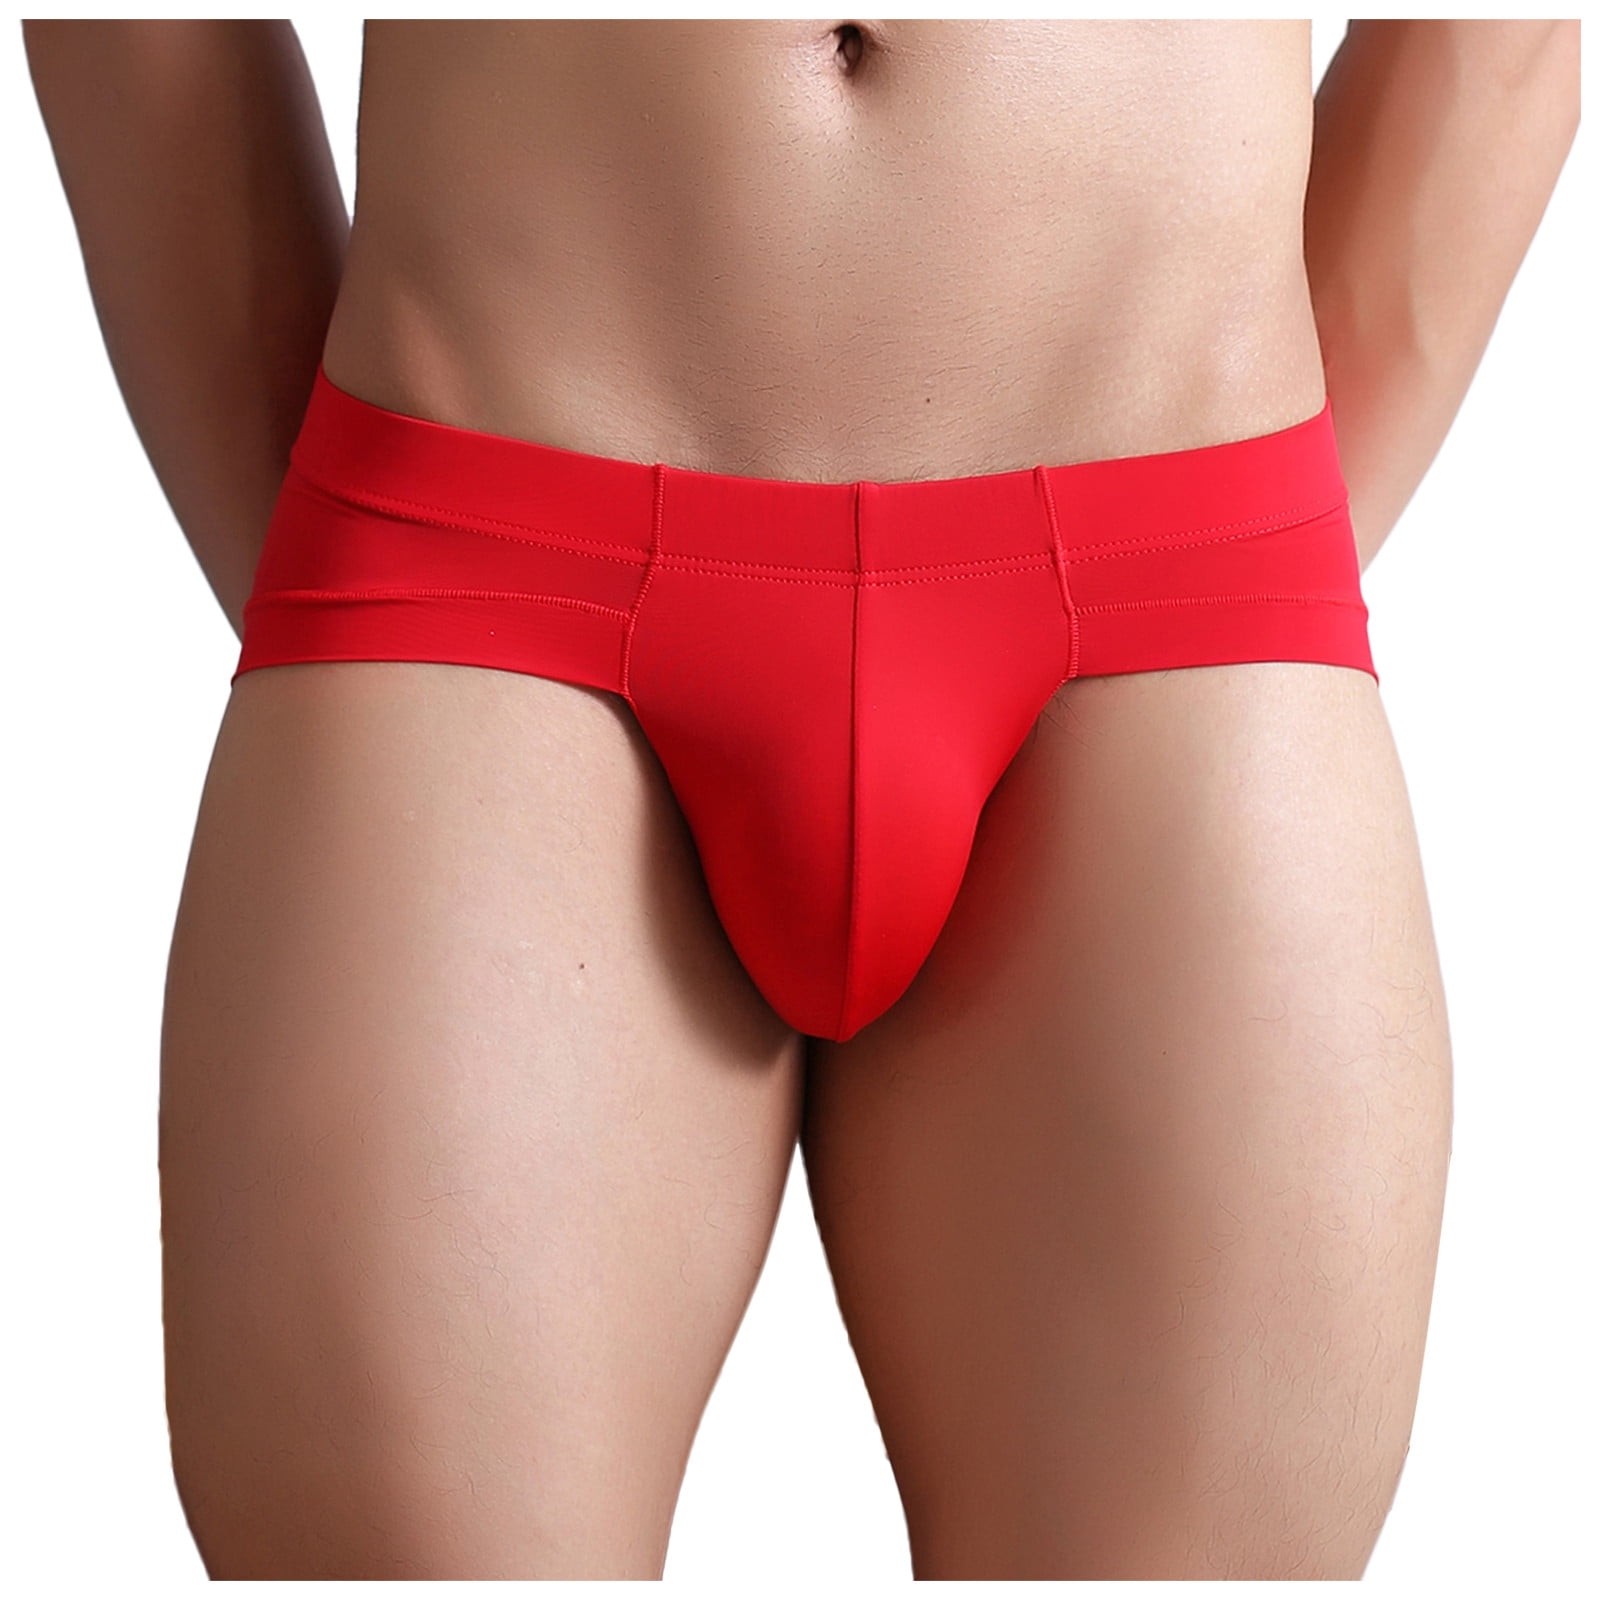 AnuirheiH Men's Lingerie Sexy Underwear Thong Underpants Soft Briefs  Panties 4$ off 2nd item 